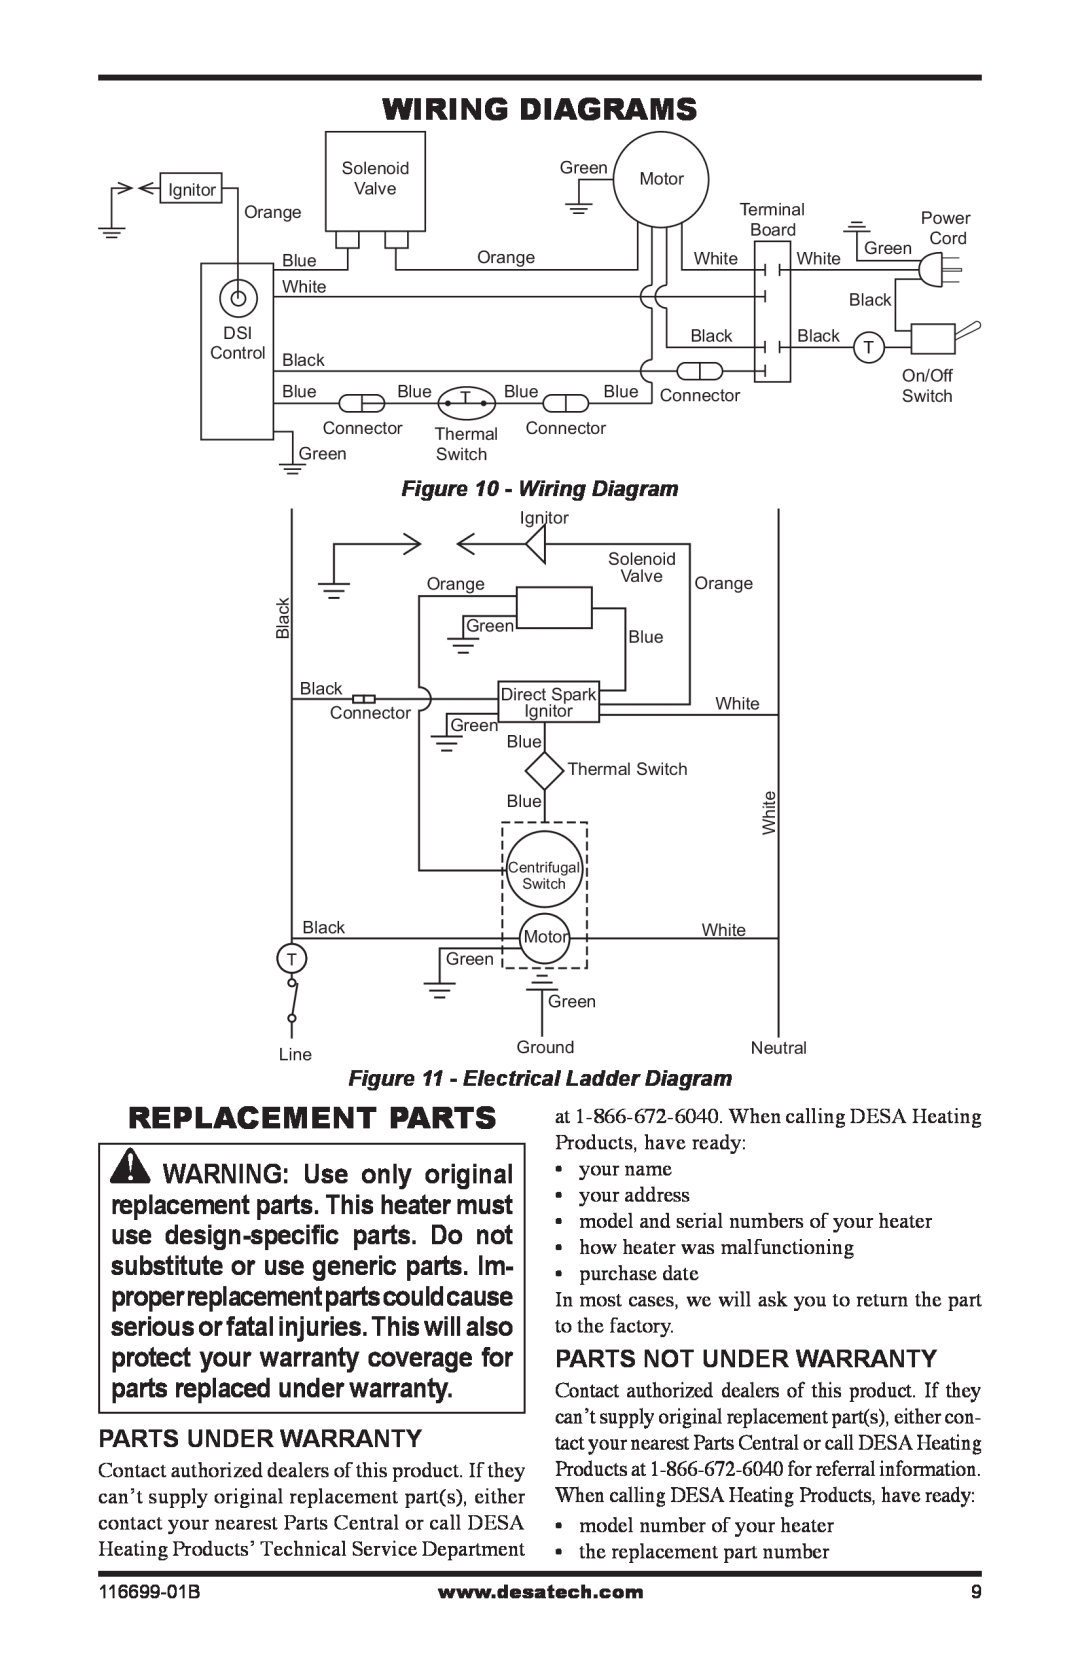 Desa 375-F Wiring Diagrams, Replacement Parts, Parts Under Warranty, Parts Not Under Warranty, Electrical Ladder Diagram 